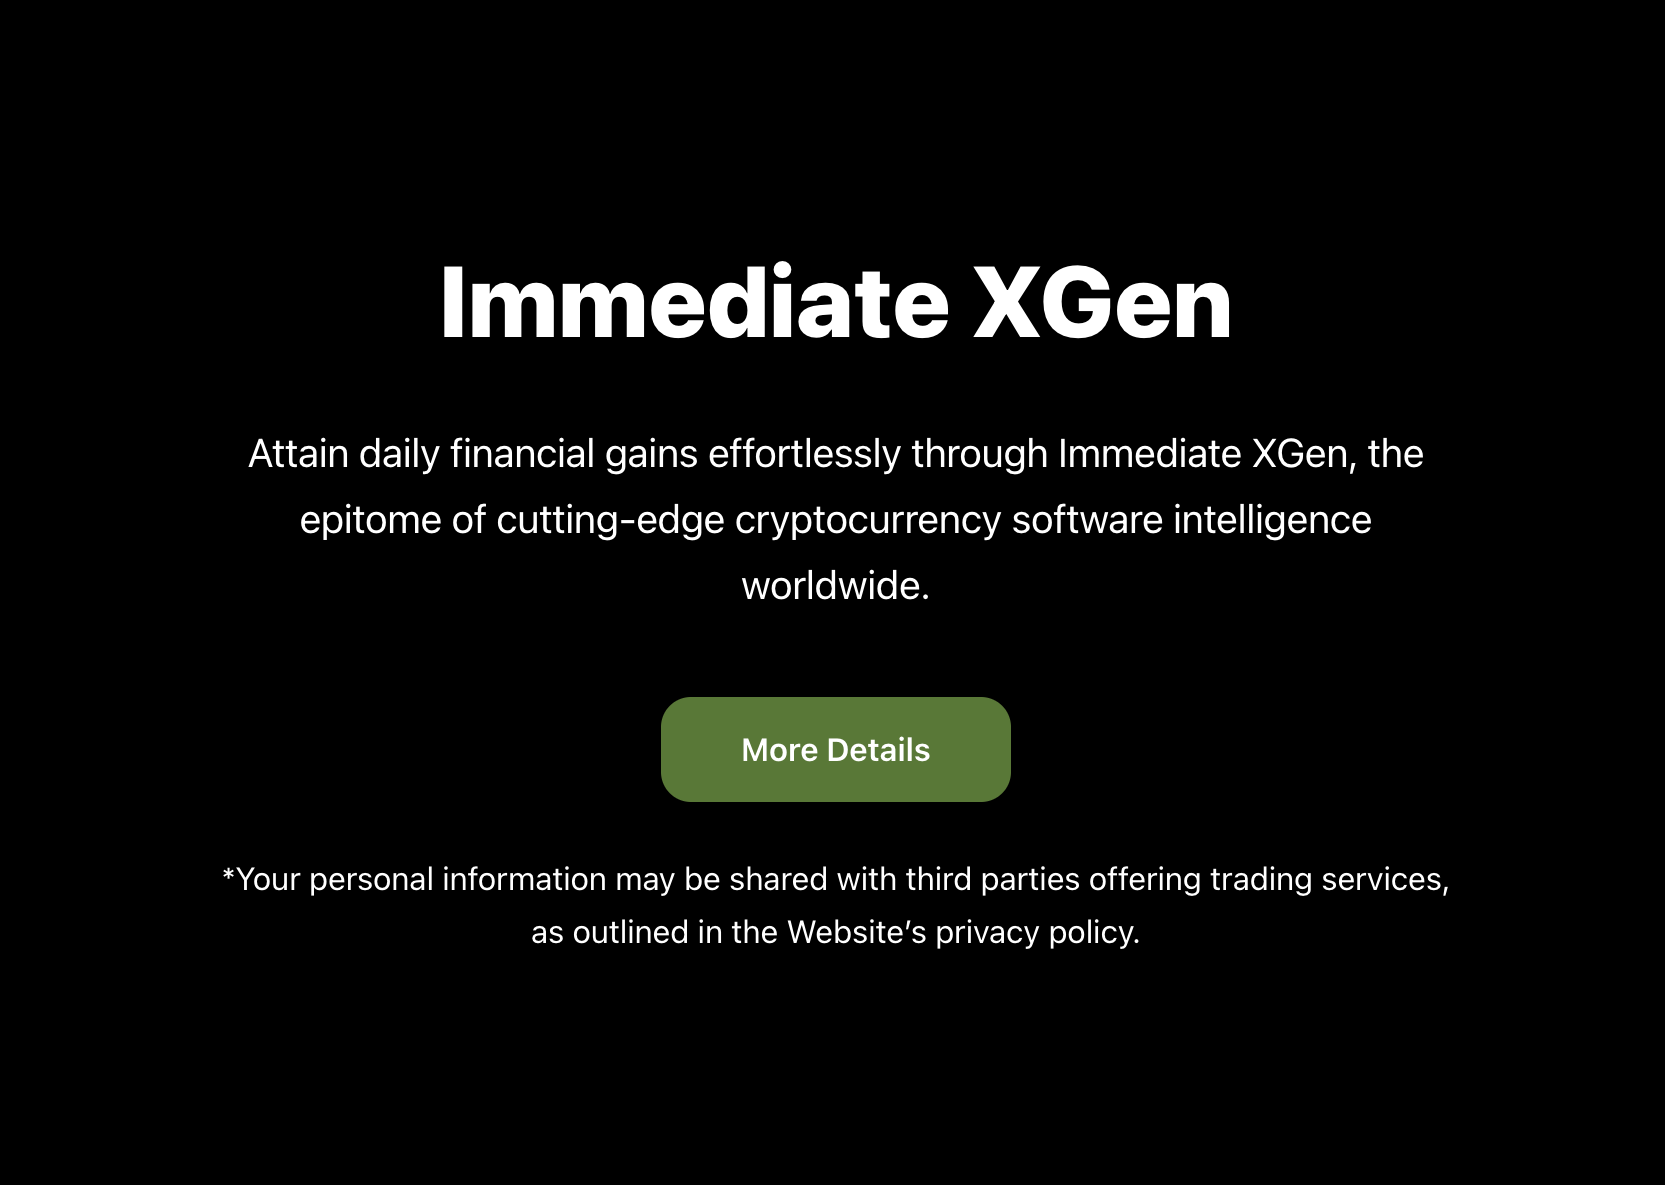 Immediate XGen Review - Legit Crypto Trading Platform? - Techopedia